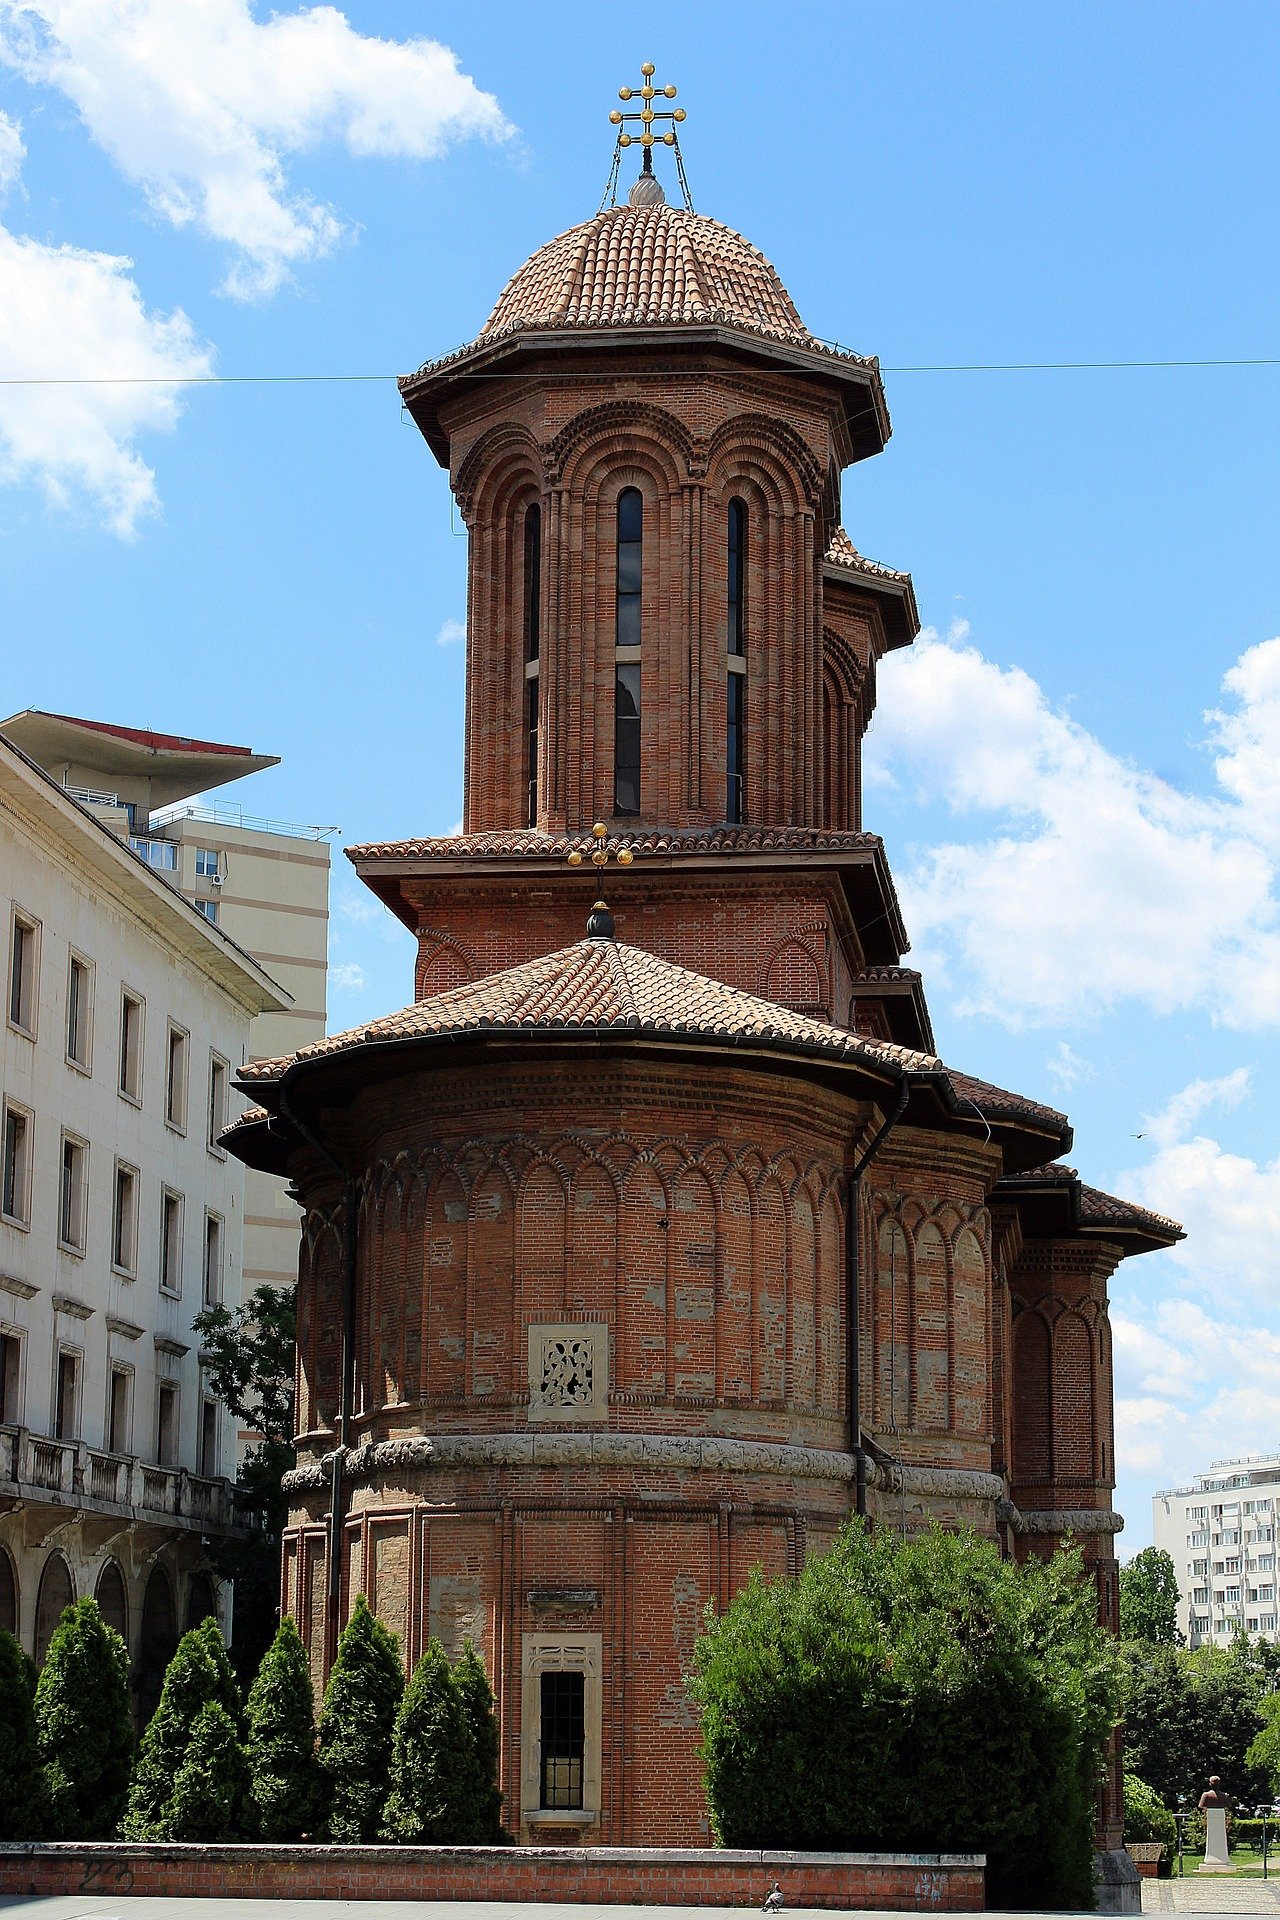 Kretulescu Church in the heart of the Capital city Bucharest